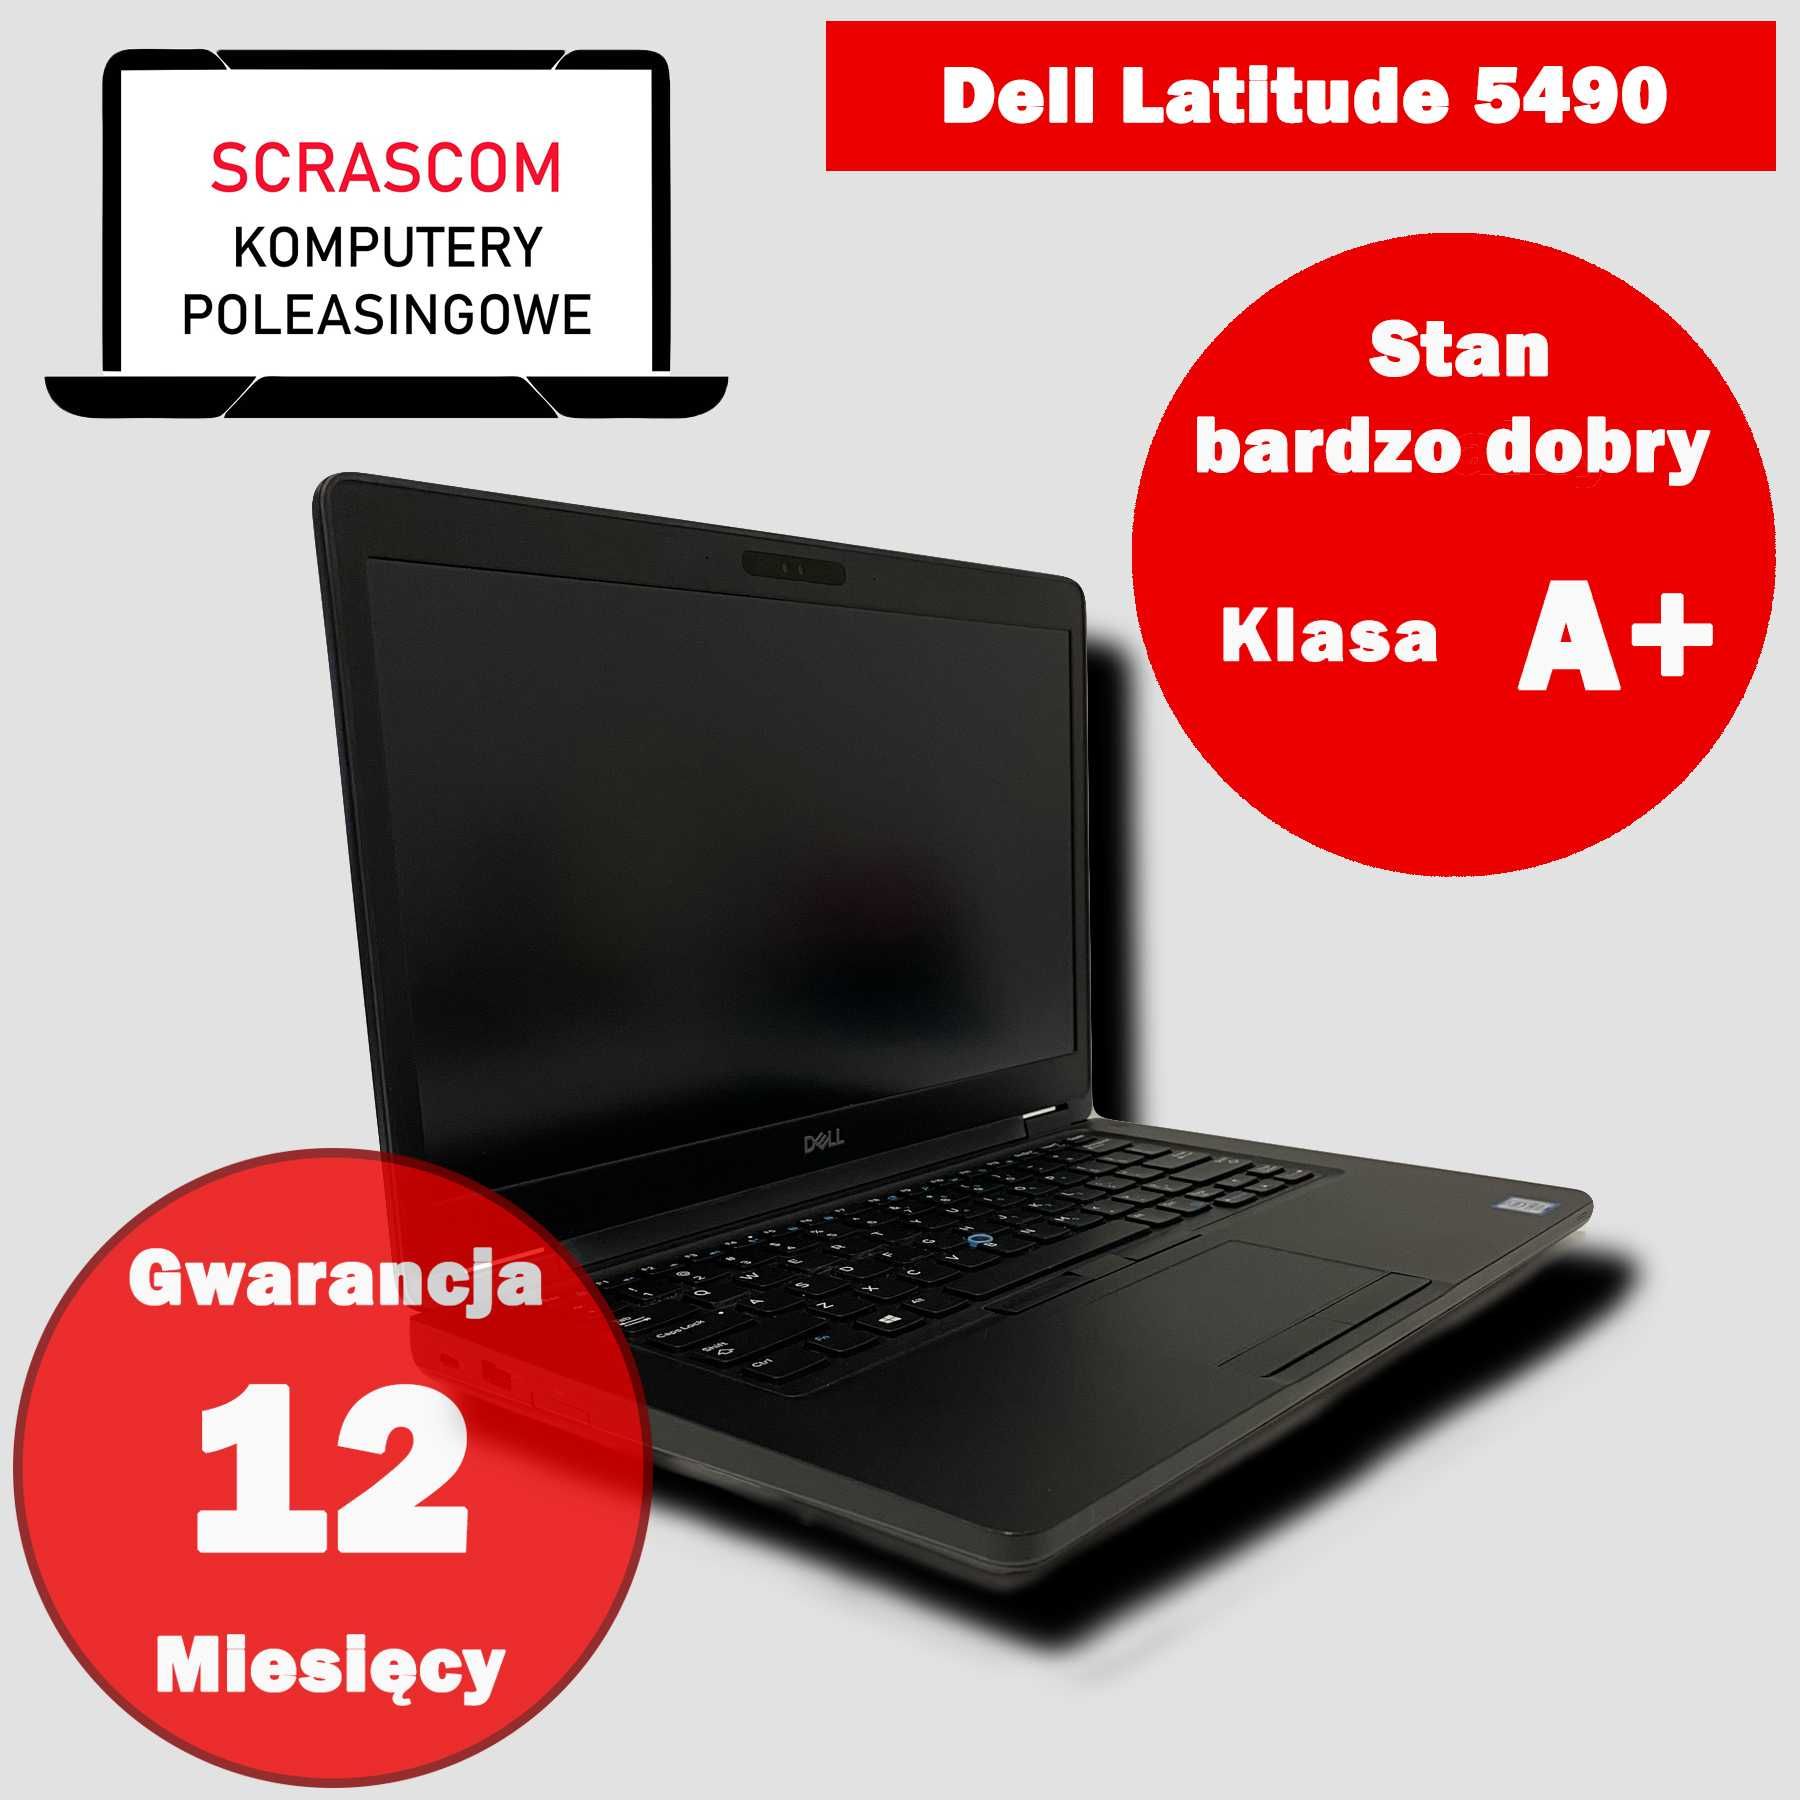 Laptop Dell Latitude 5490 i7 16GB 512GB SSD Windows 10 GWAR 12msc